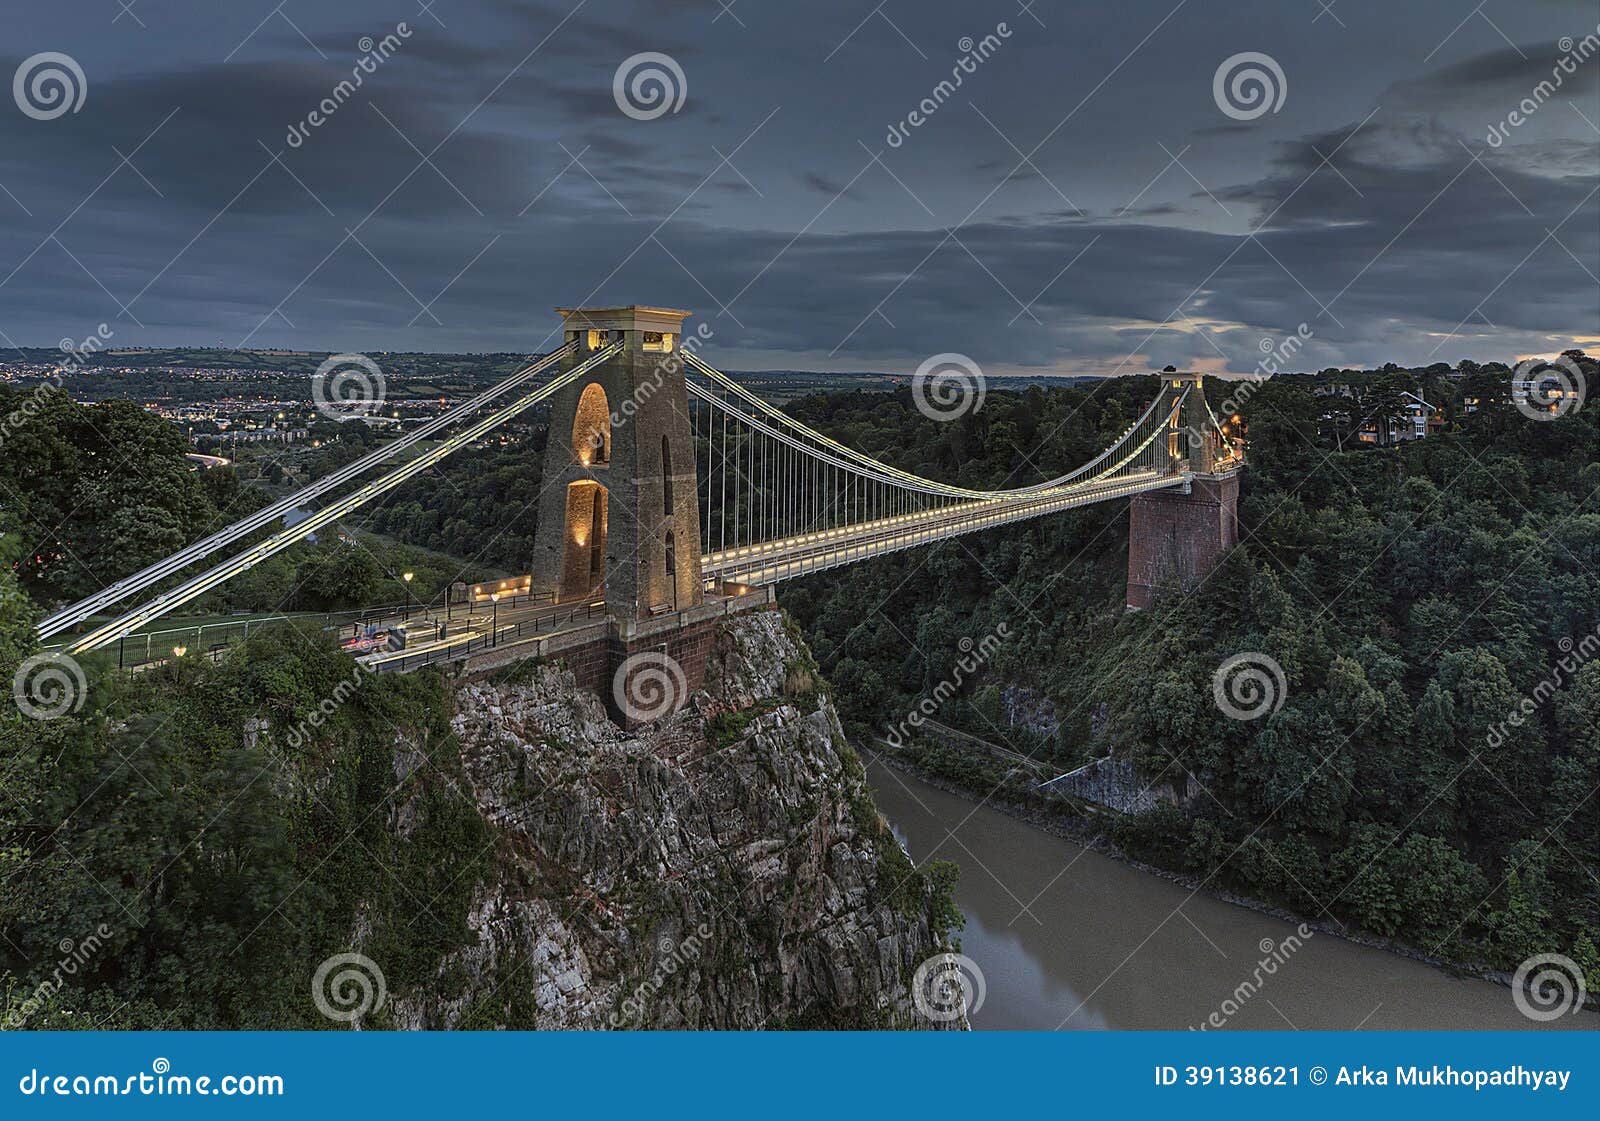 clifton suspension bridge [bristol, united kingdom